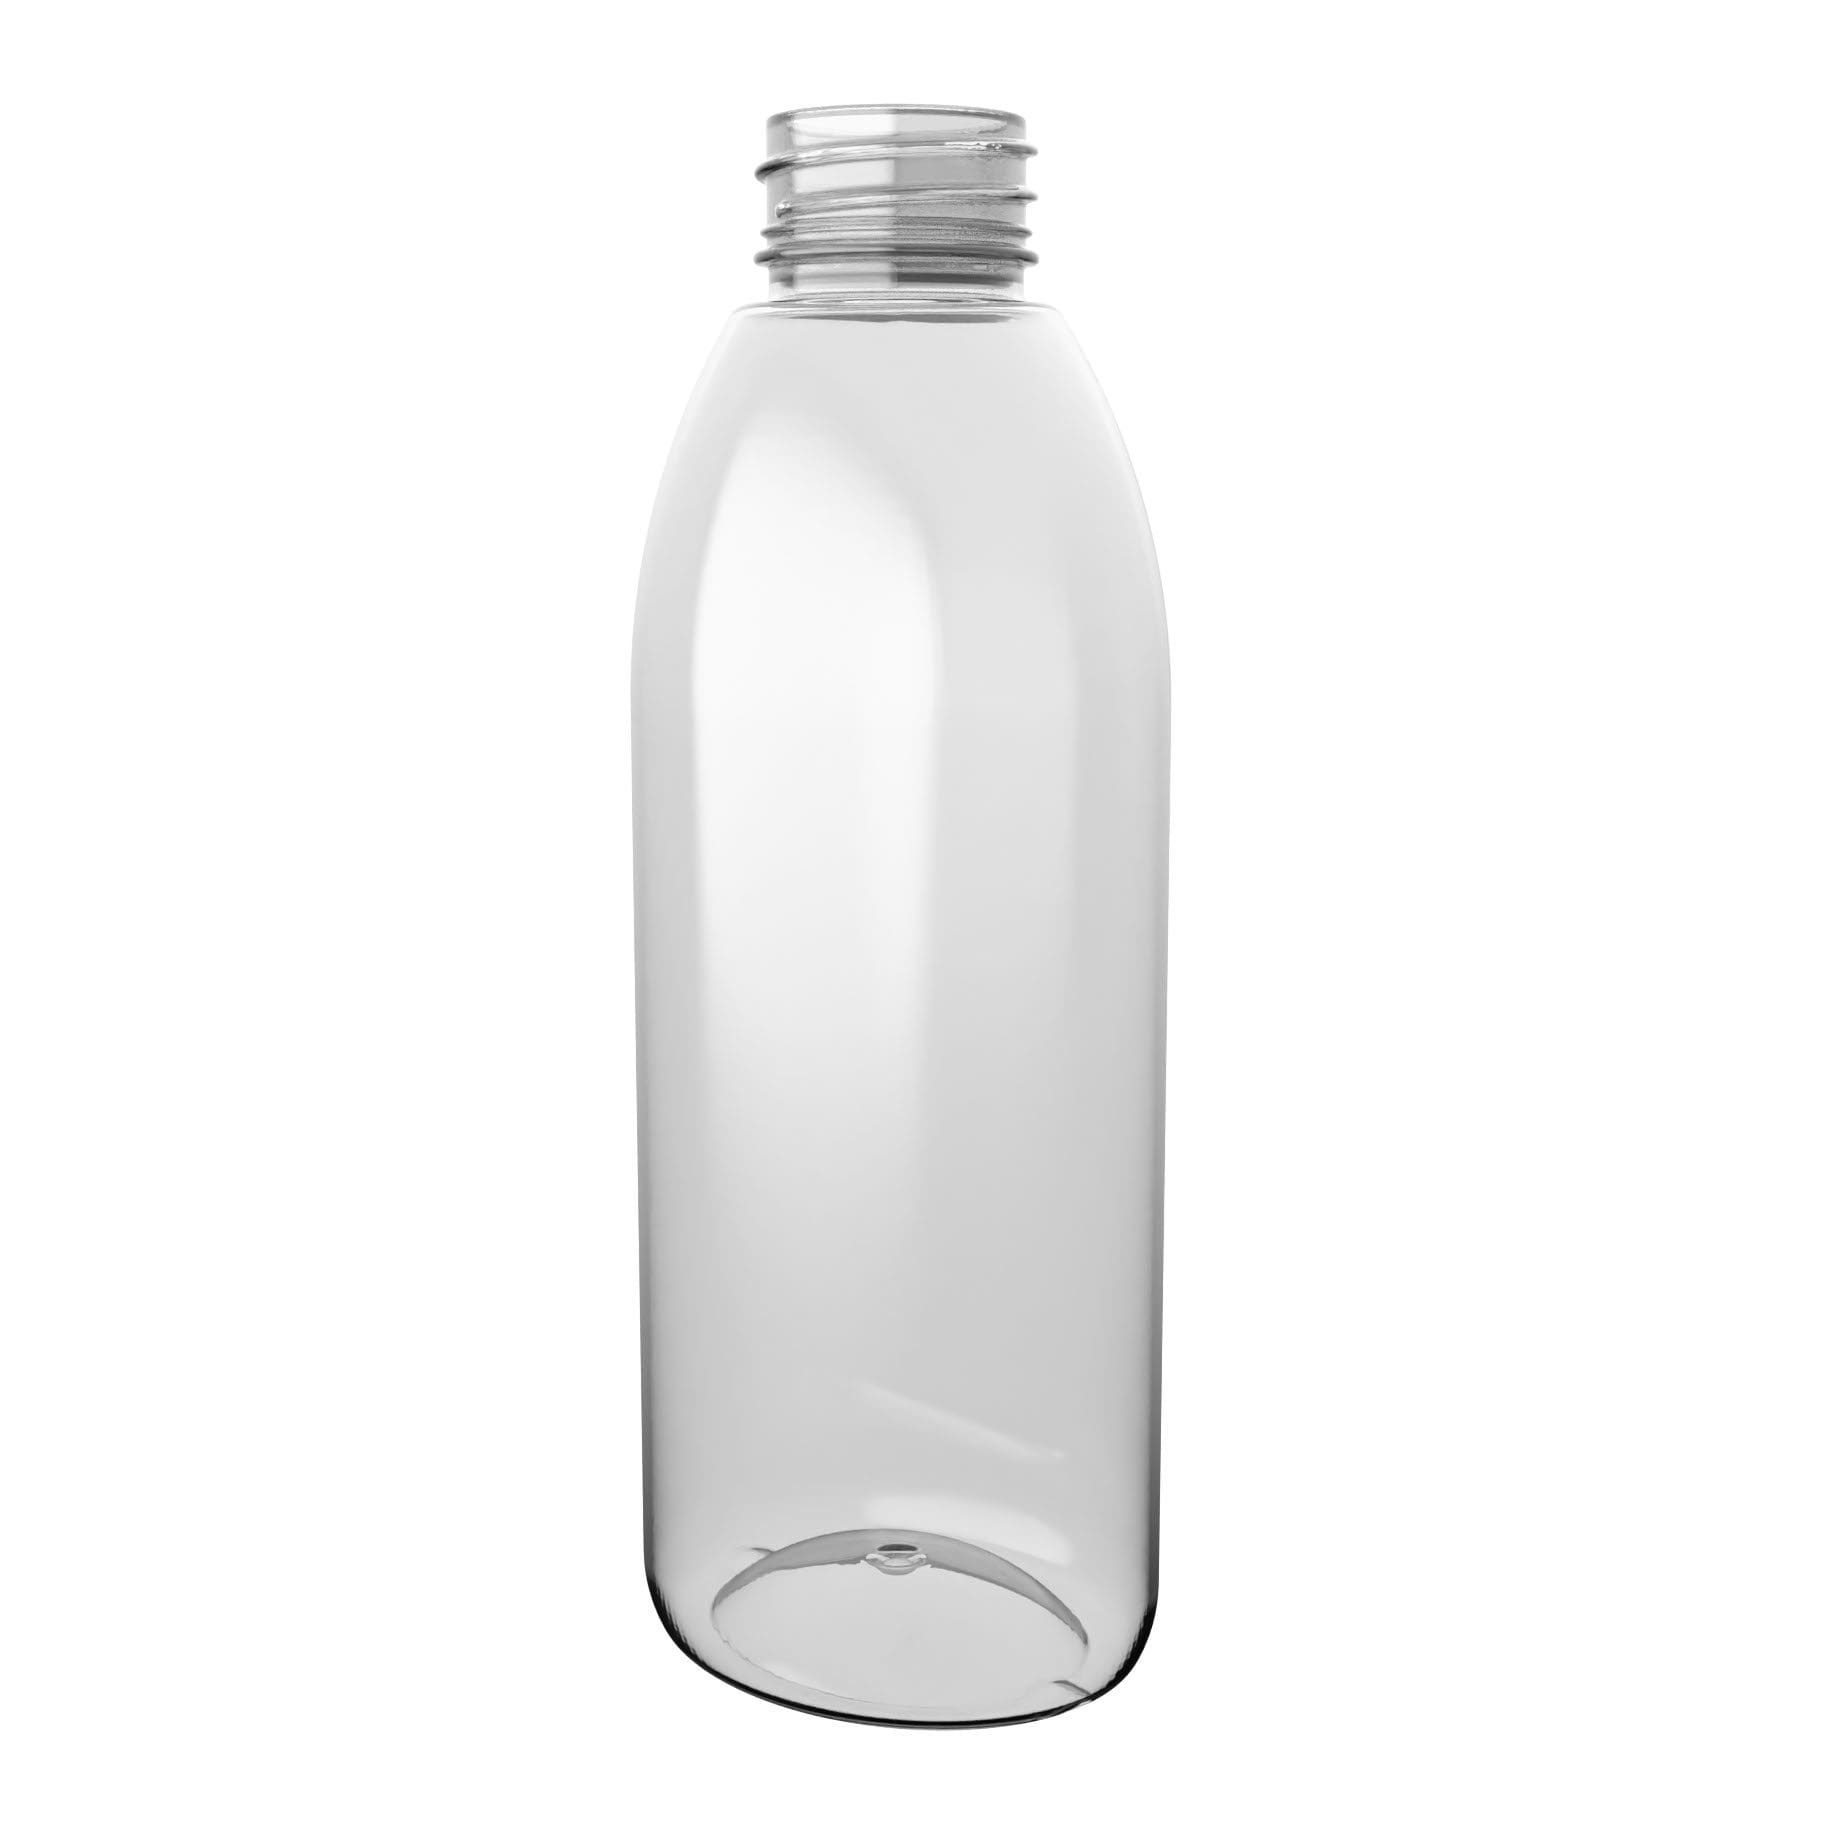 PET-Flasche EPROCARE OVAL in ovaler Flaschenform.